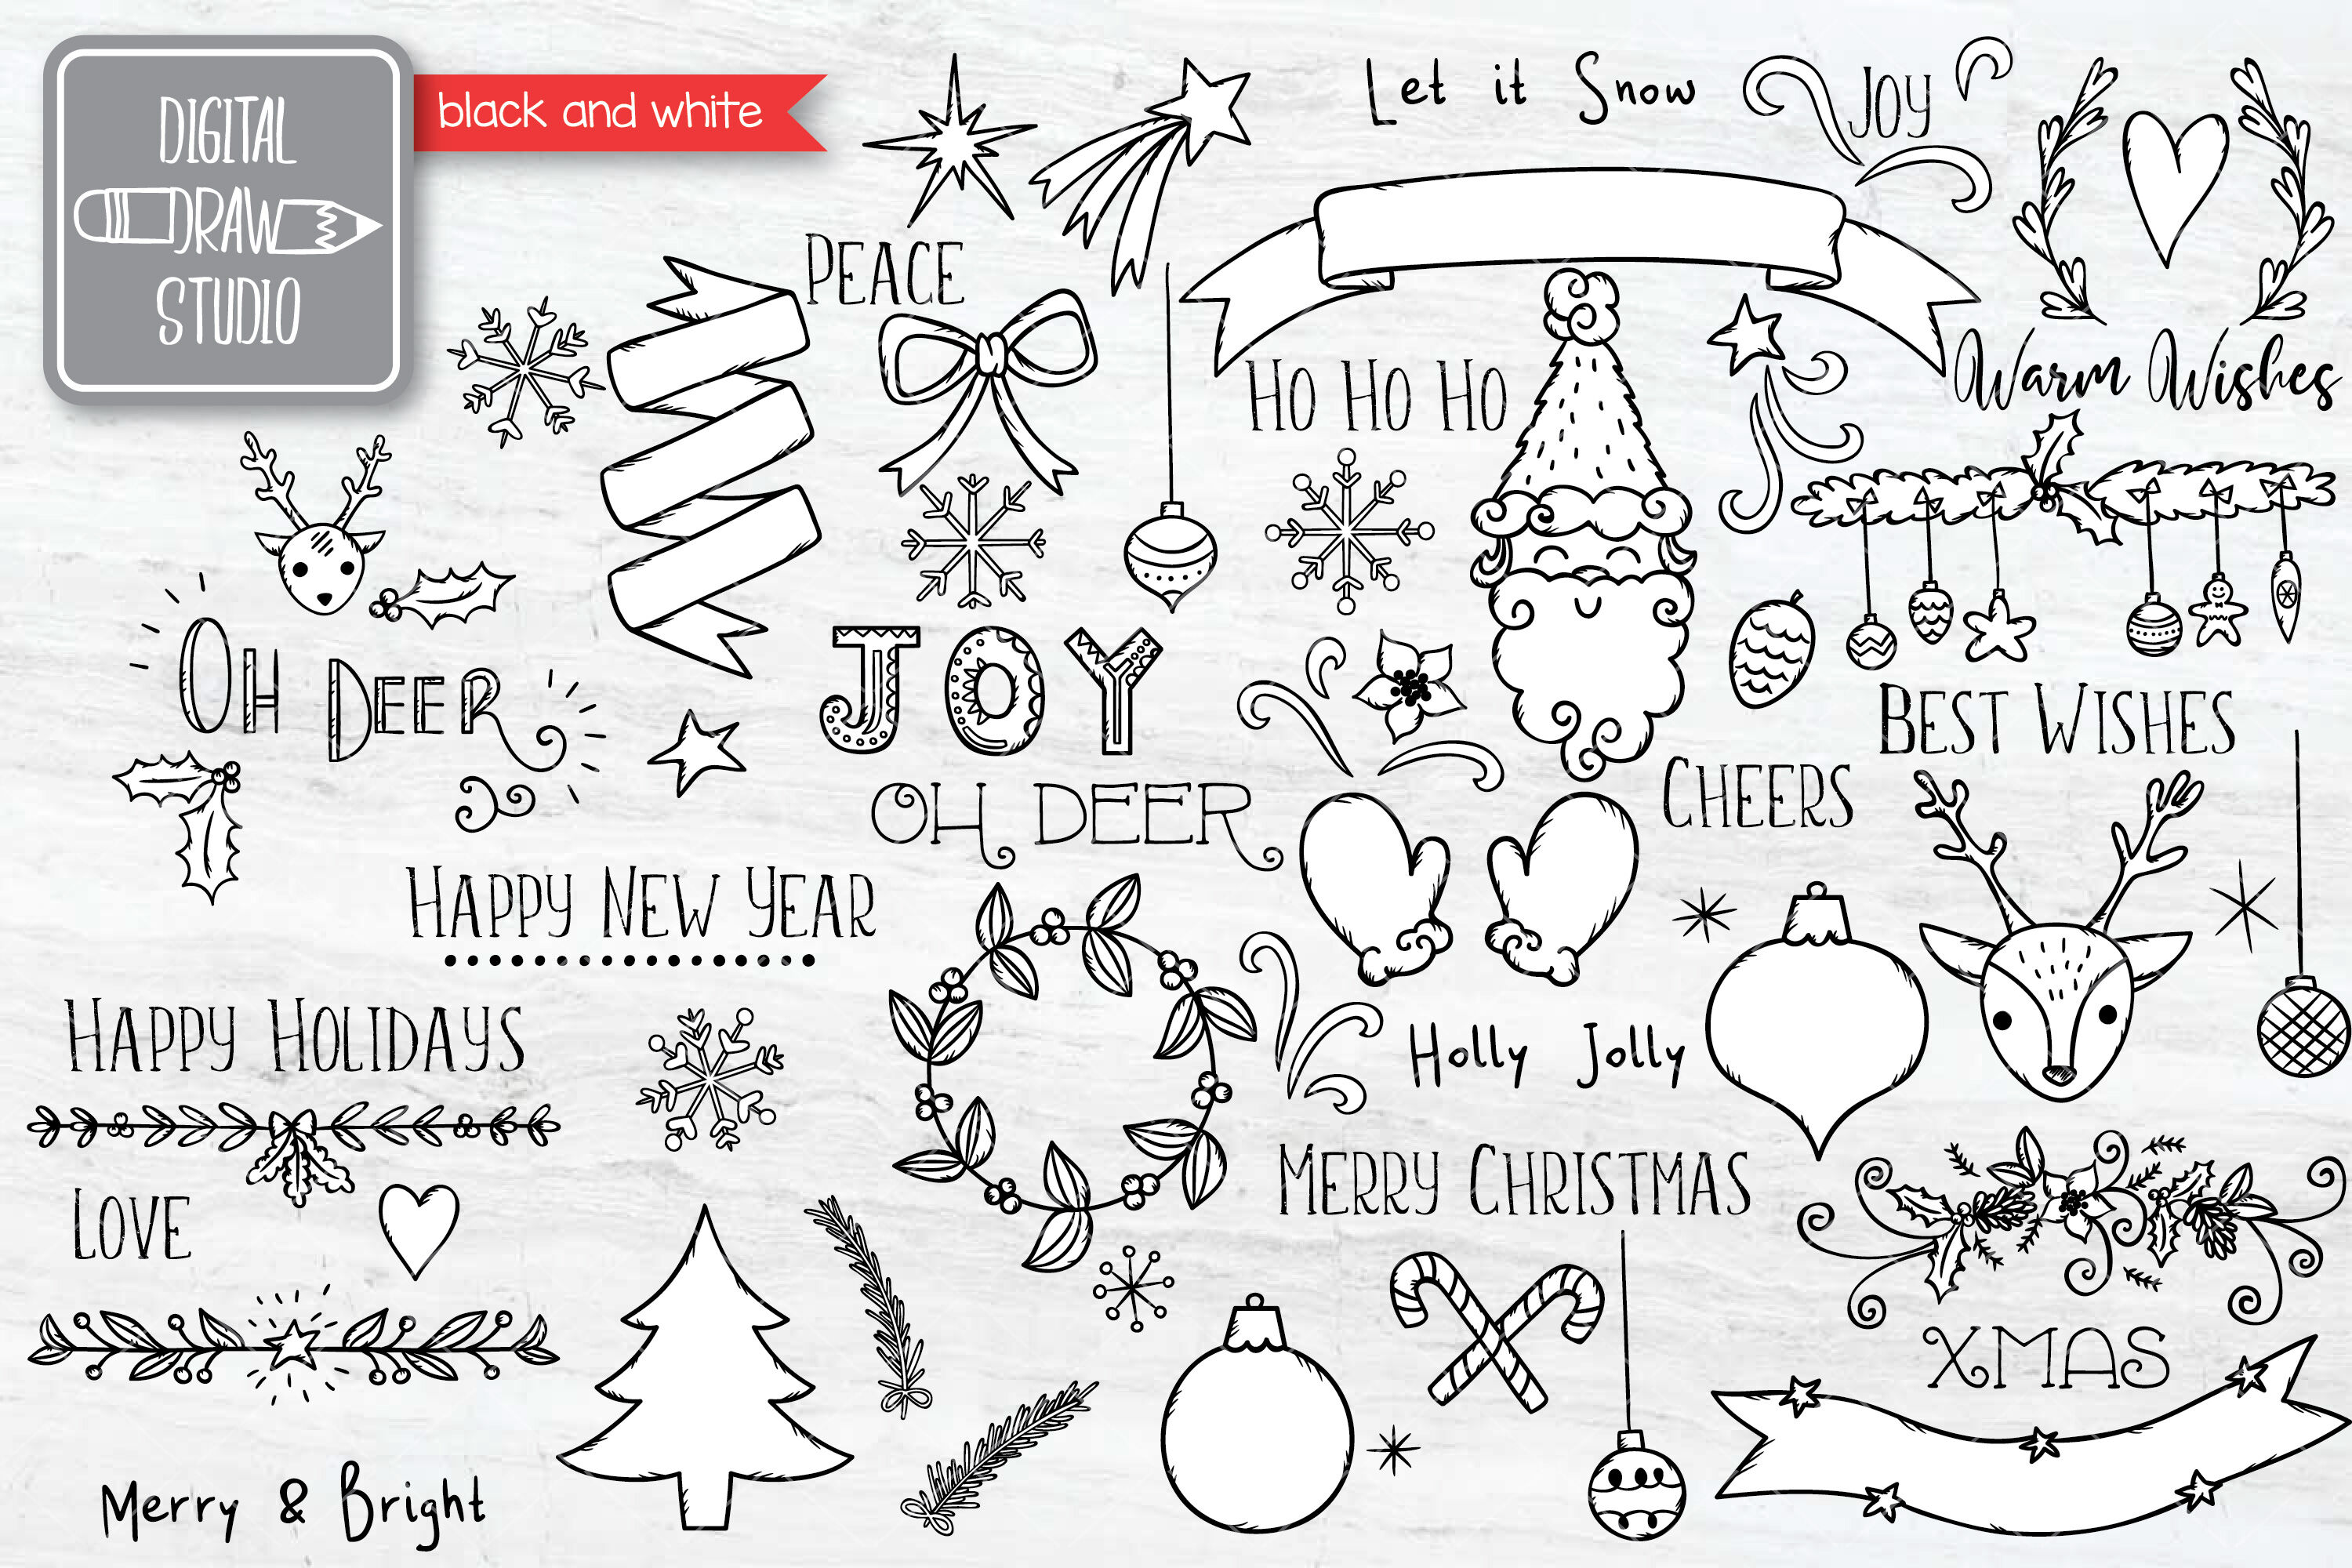 Christmas Elements Hand Drawn Ornaments Decorative Holiday By Digital Draw Studio Thehungryjpeg Com